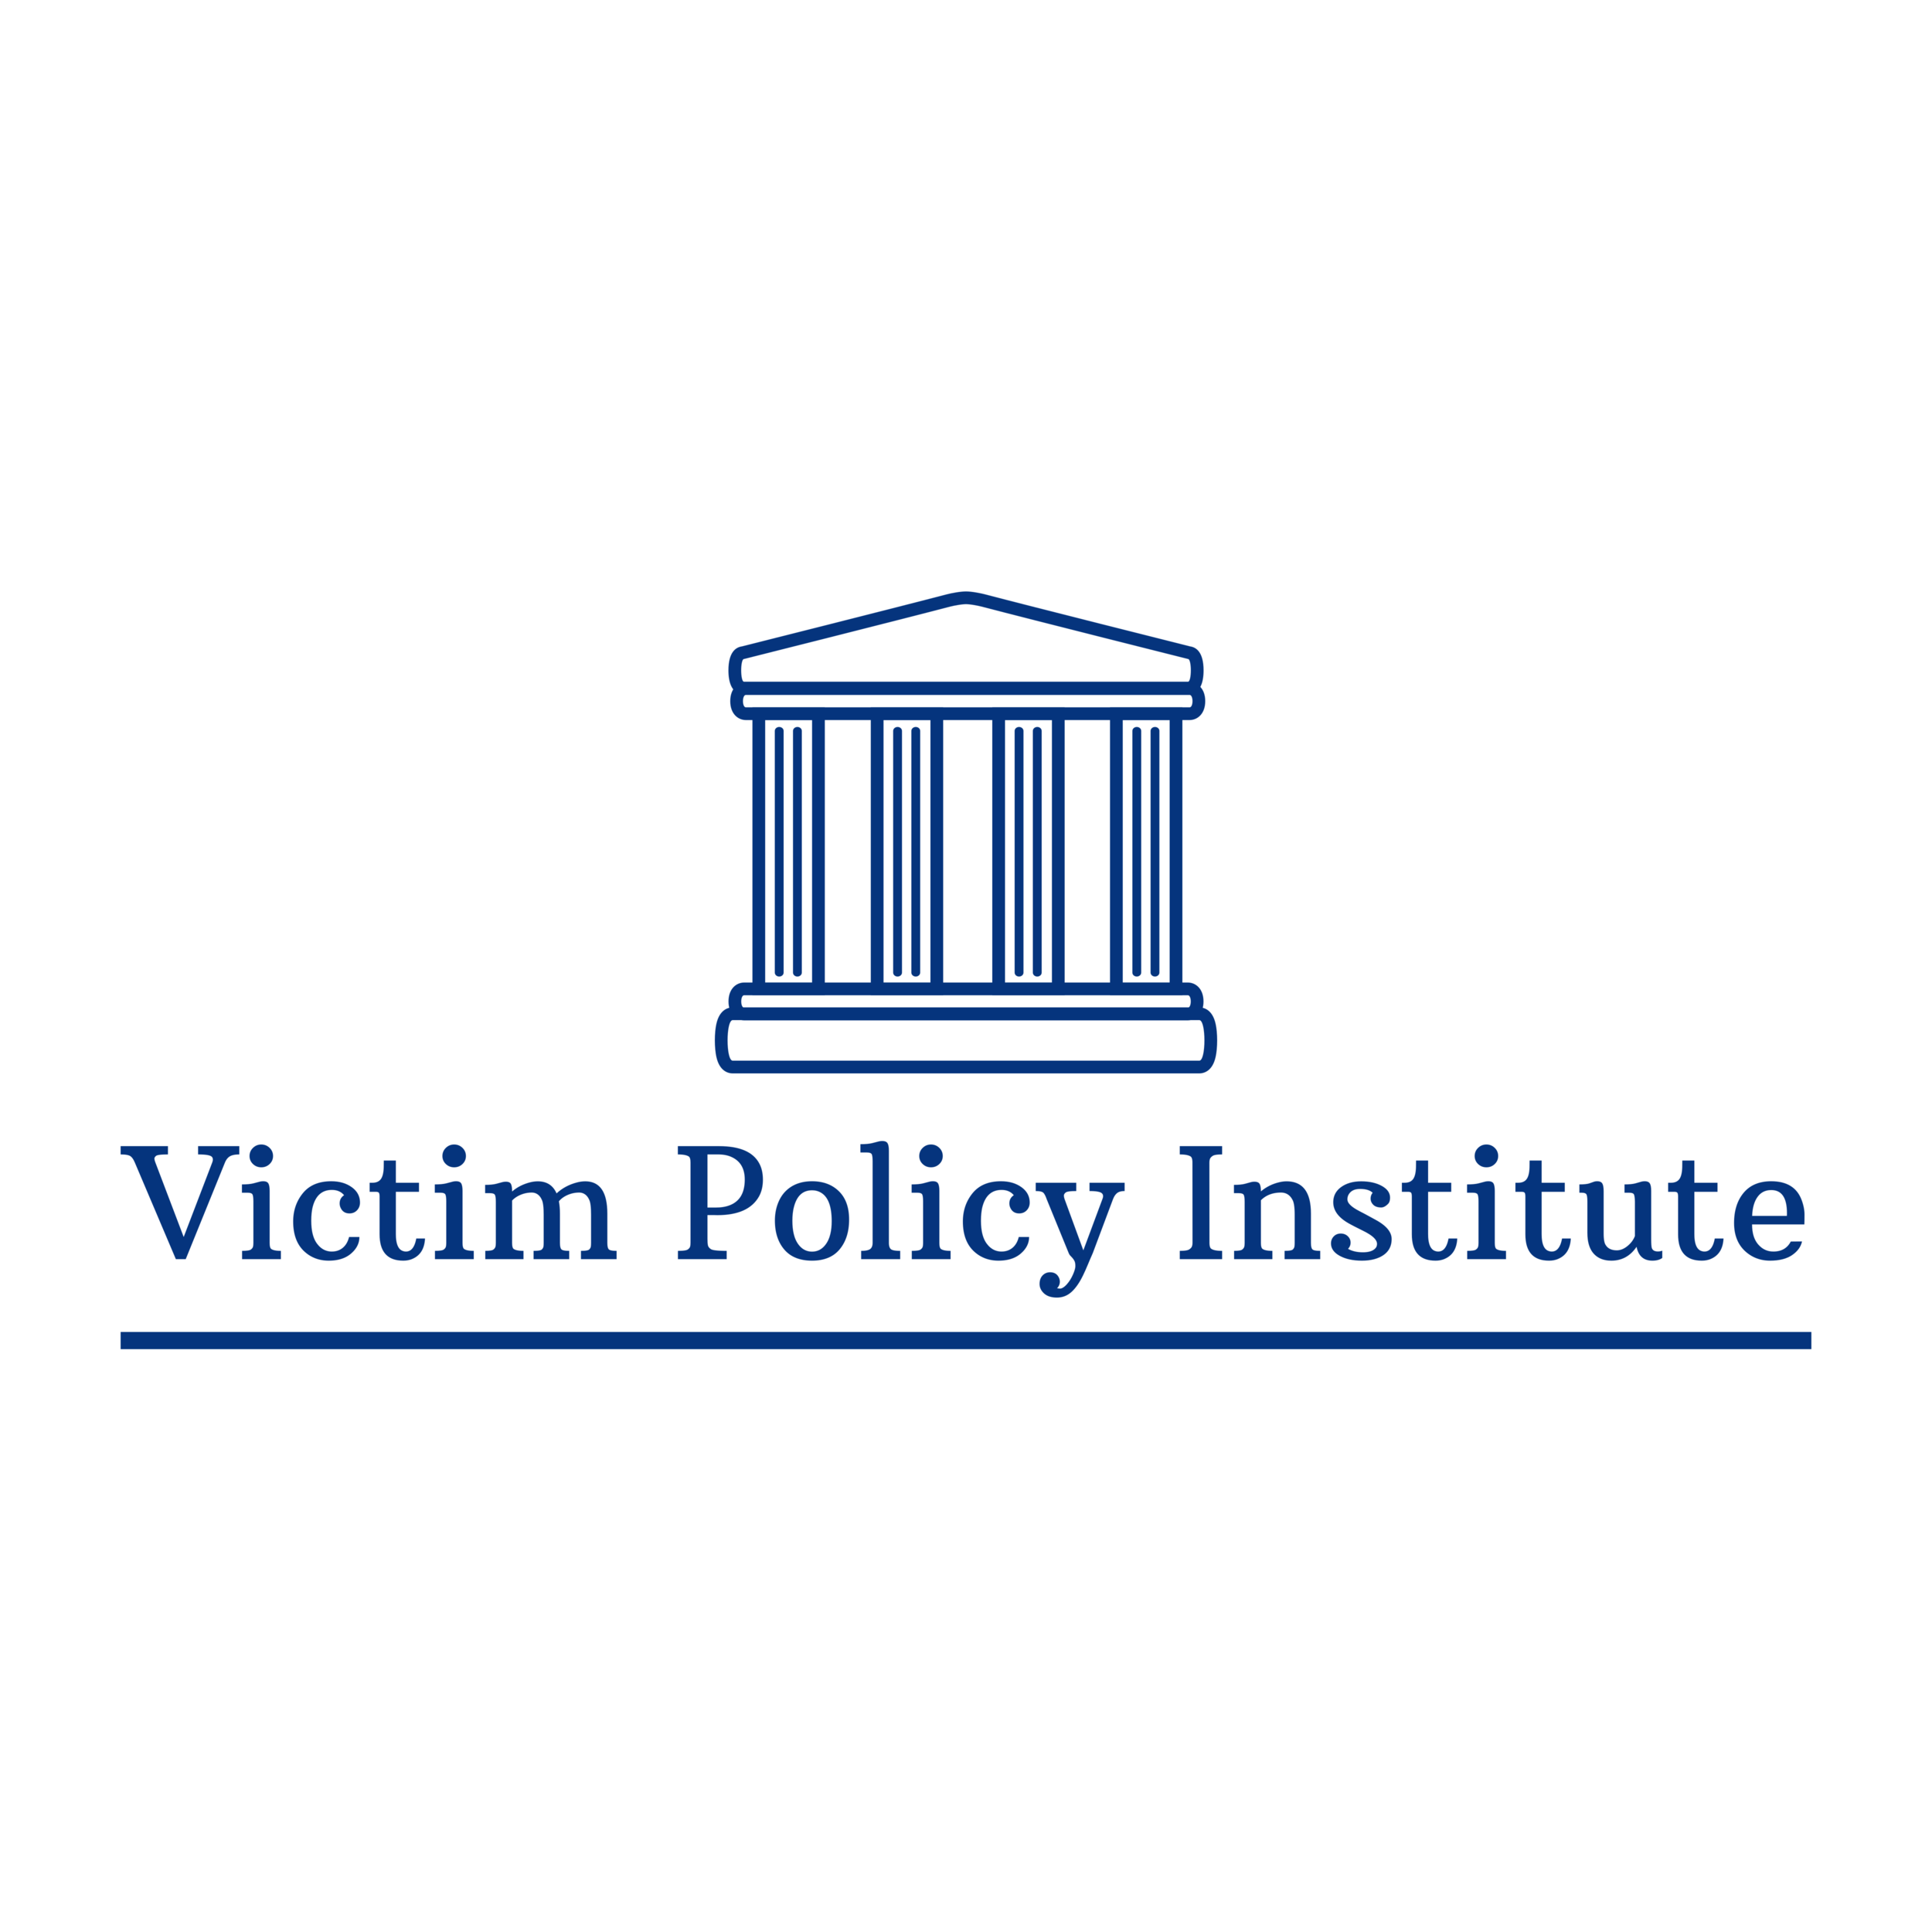 The Victim Policy Institute